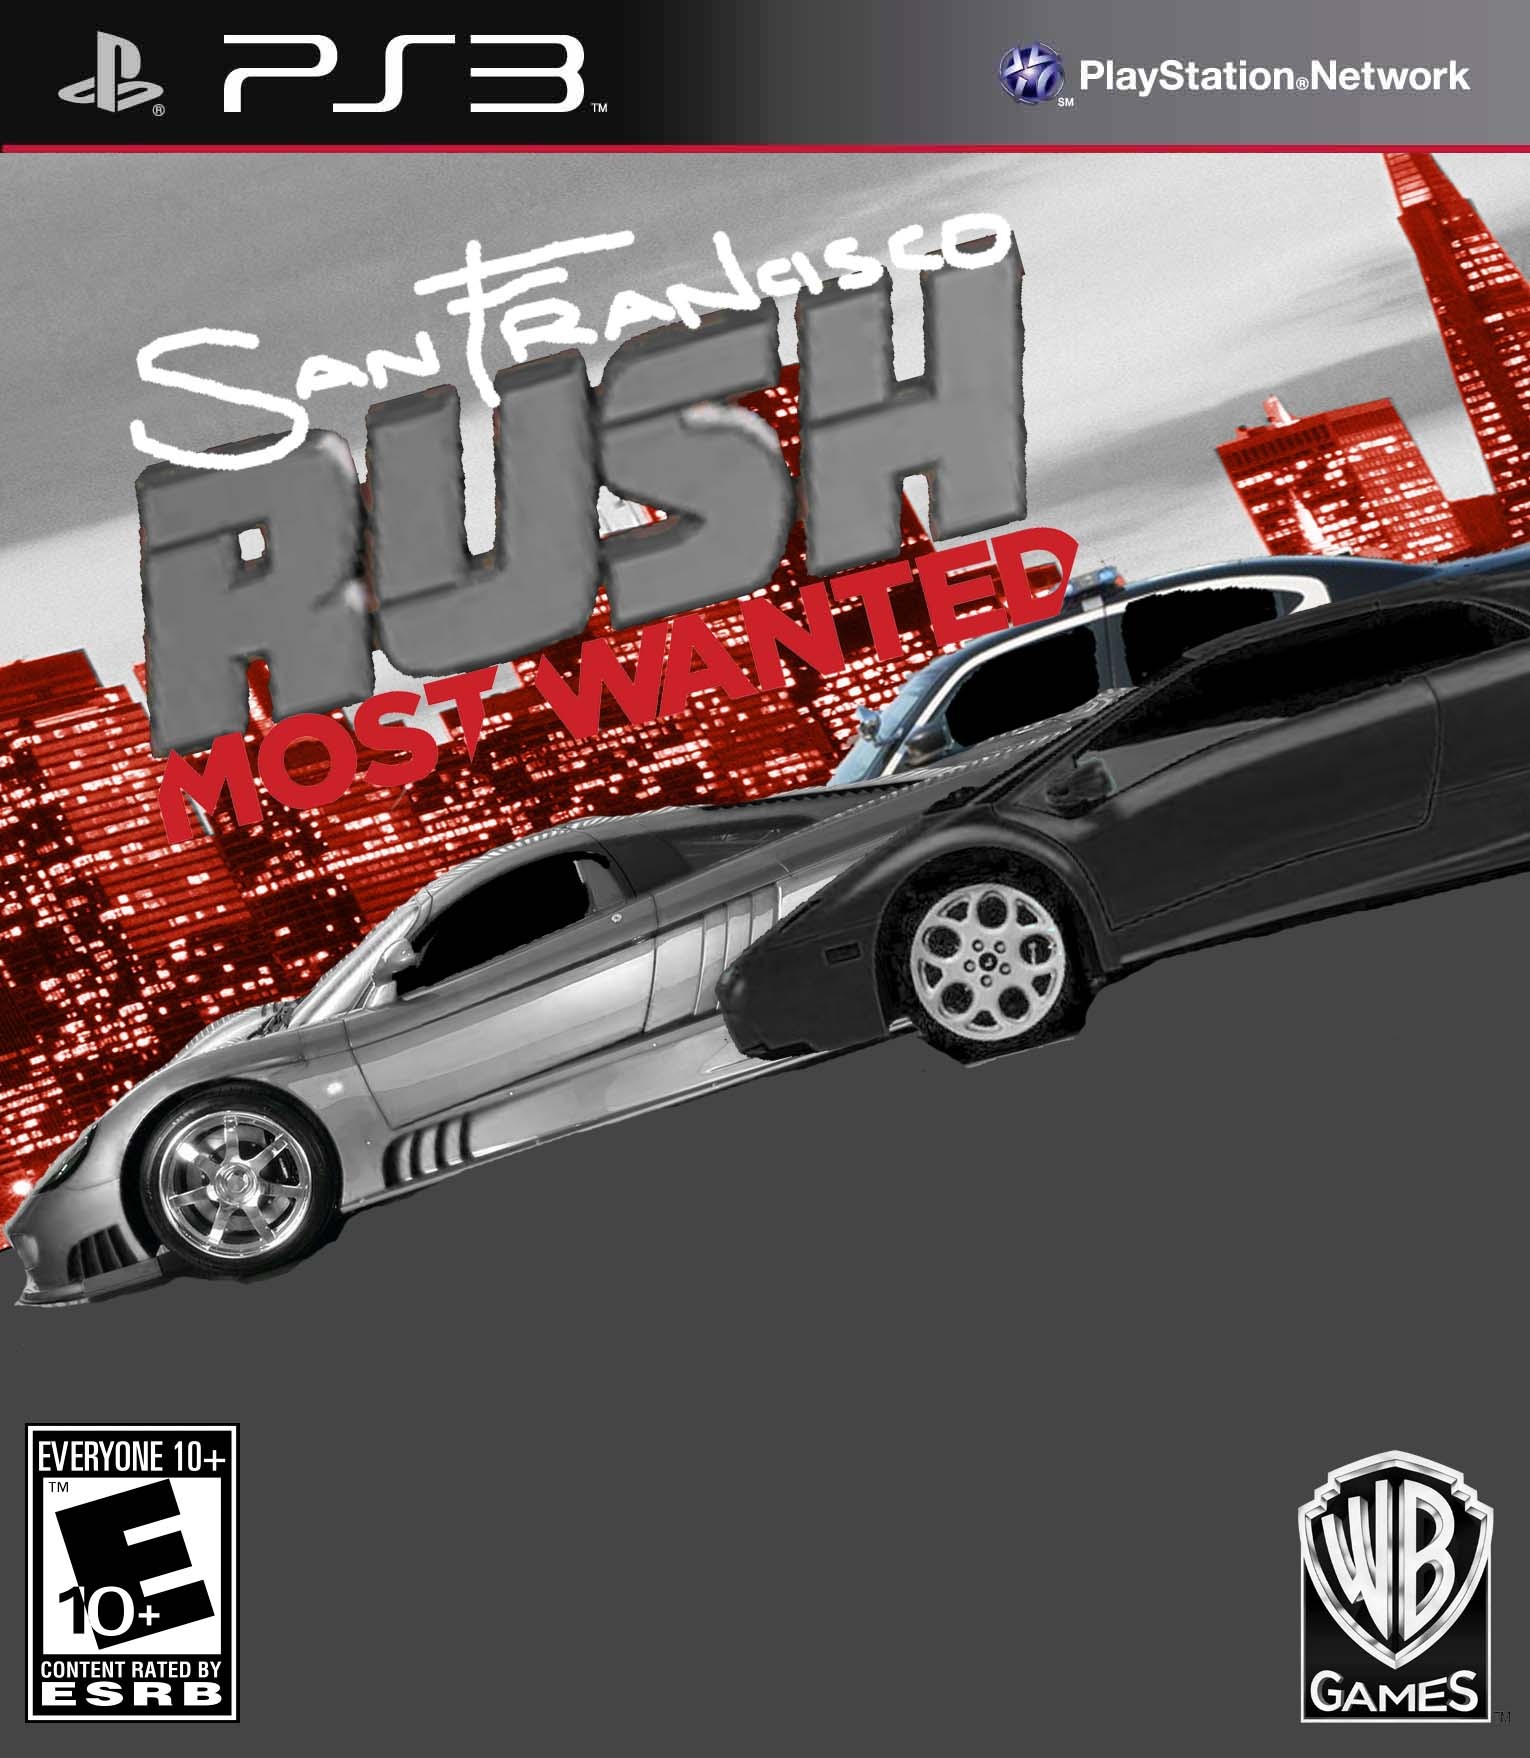 San Francisco Rush: Most Wanted box cover